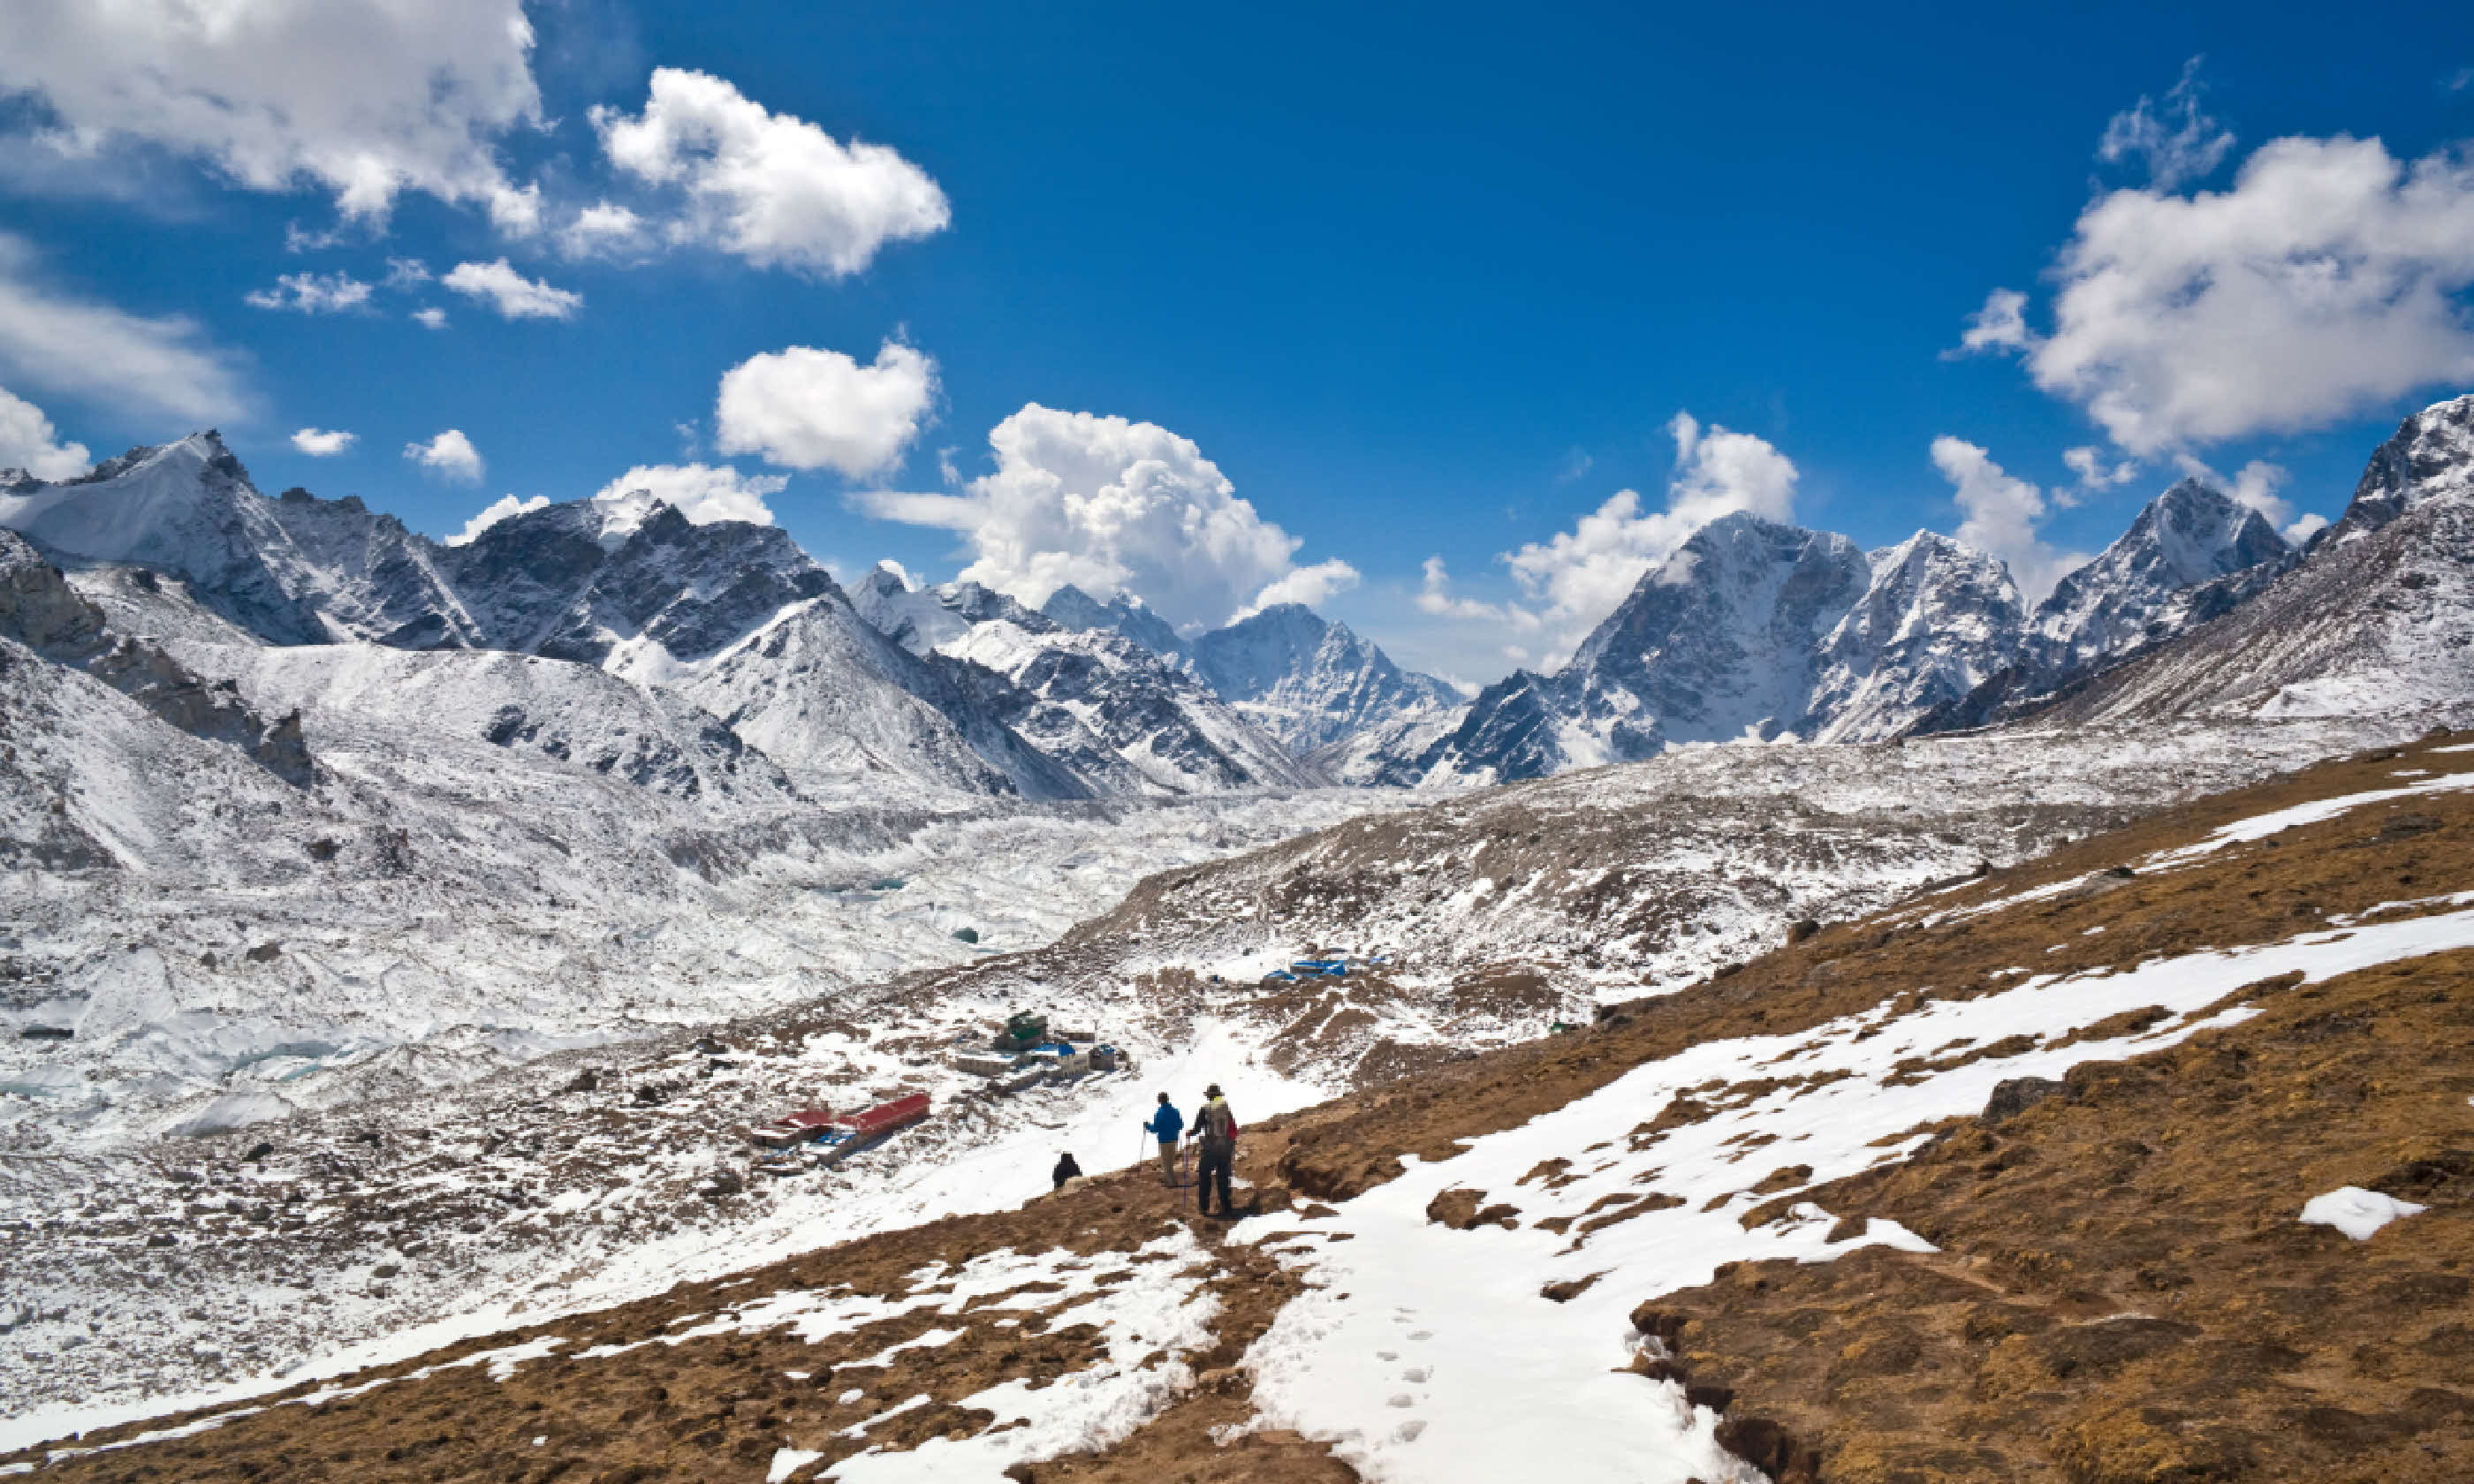 Khumbu glacier, view from Kala Pattar (Shutterstock)